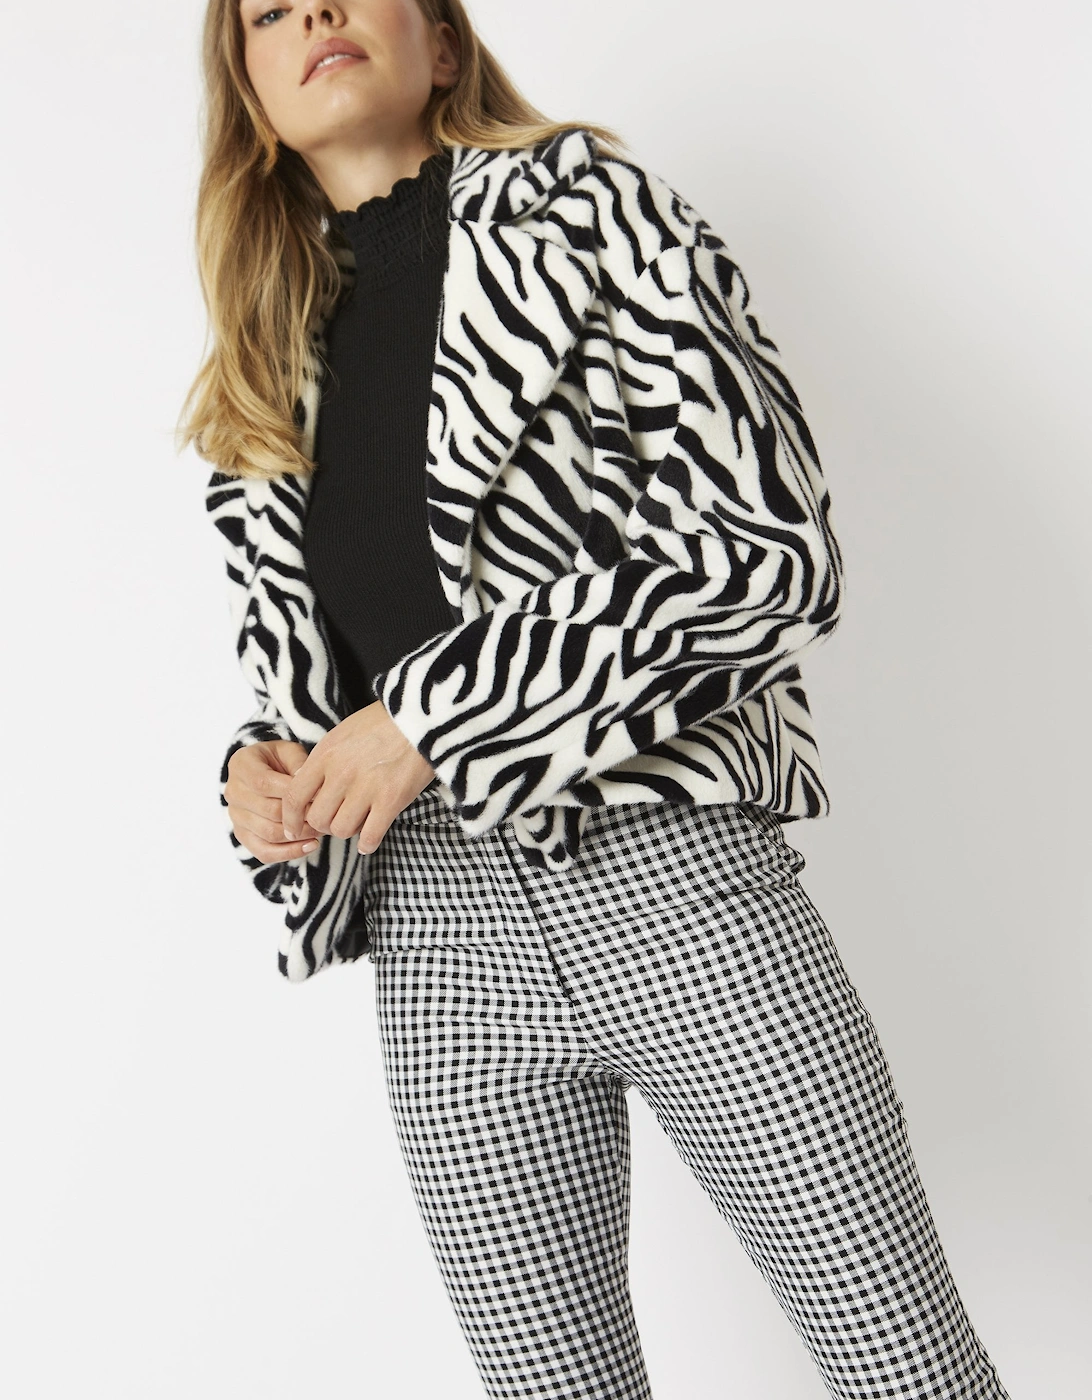 Animal Print Faux Fur Jacket in Zebra Print